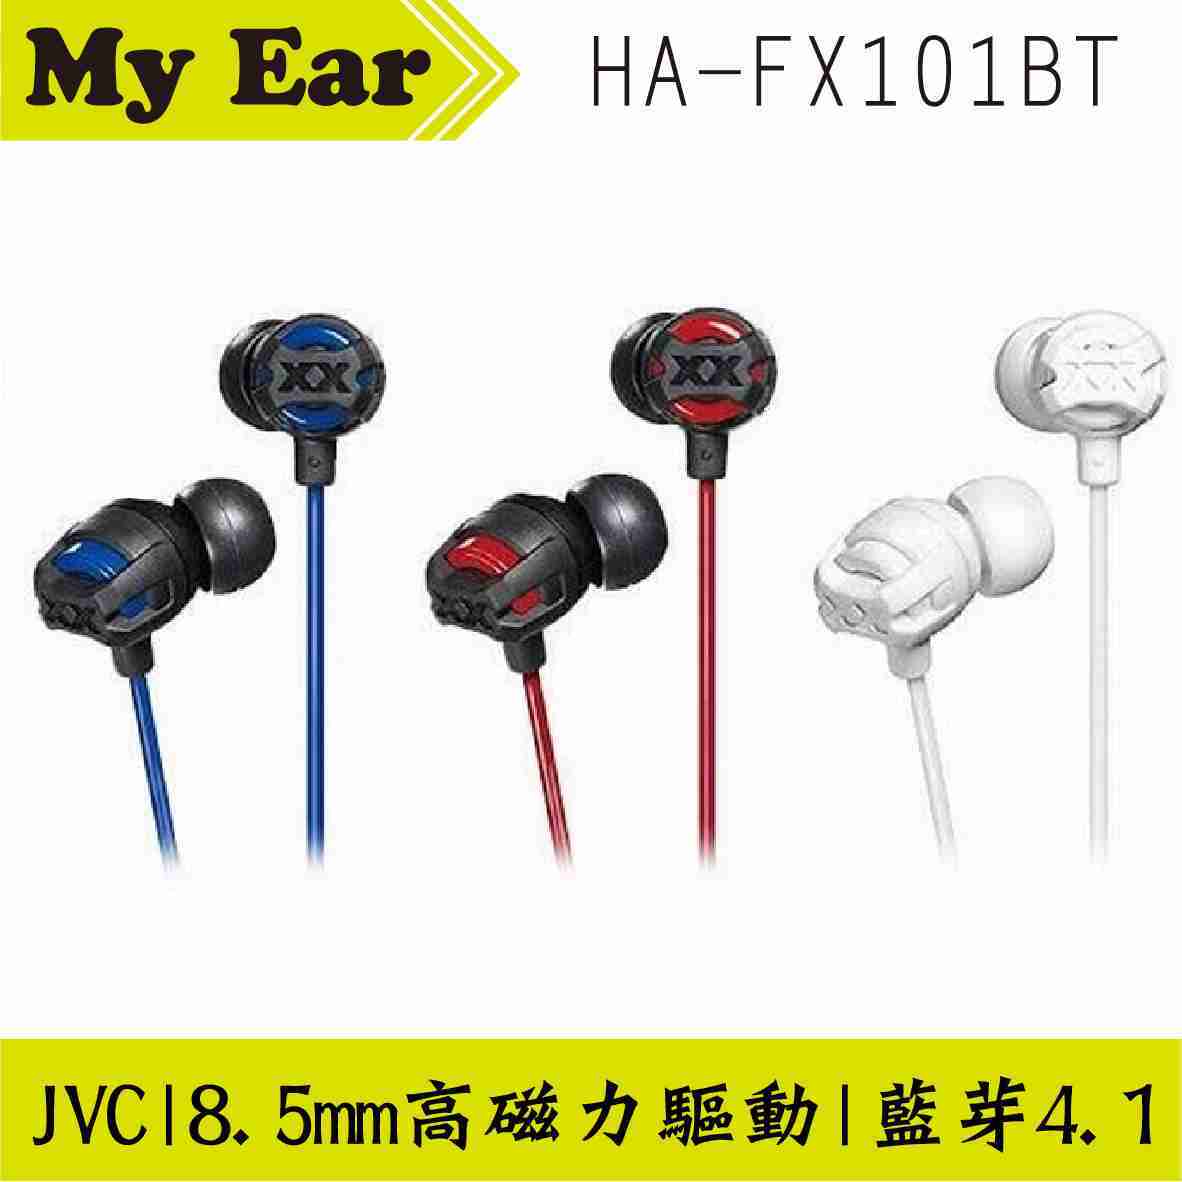 JVC HA-FX101BT 三色可選 支援藍芽4.1 高磁力驅動8.5mm 無線耳機 | My Ear耳機專門店